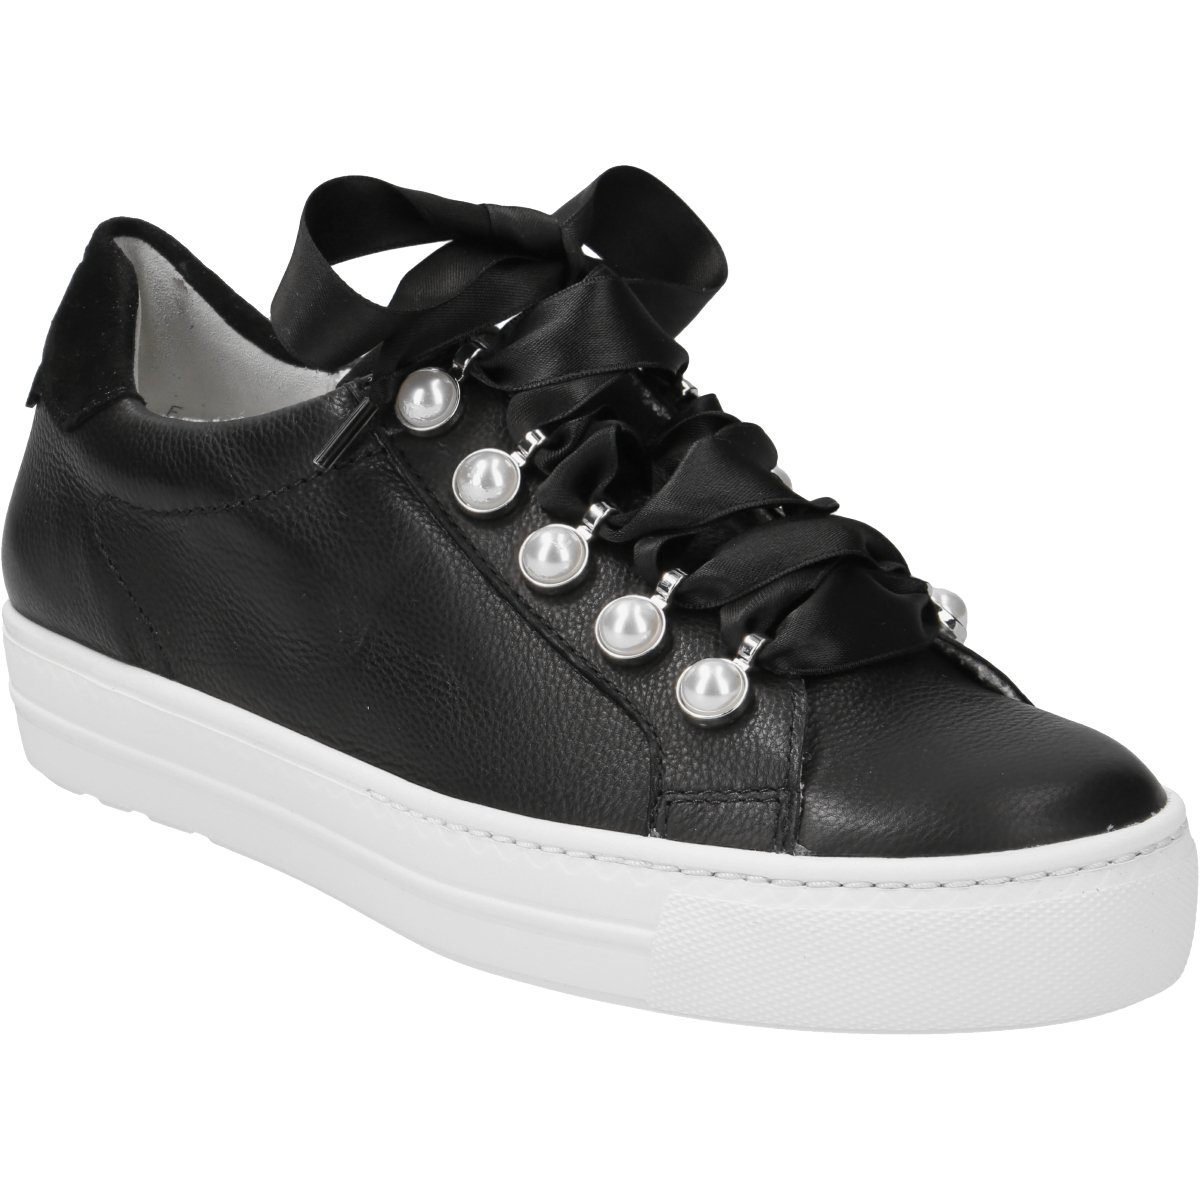 Paul Green »5121-021« Sneaker online kaufen | OTTO